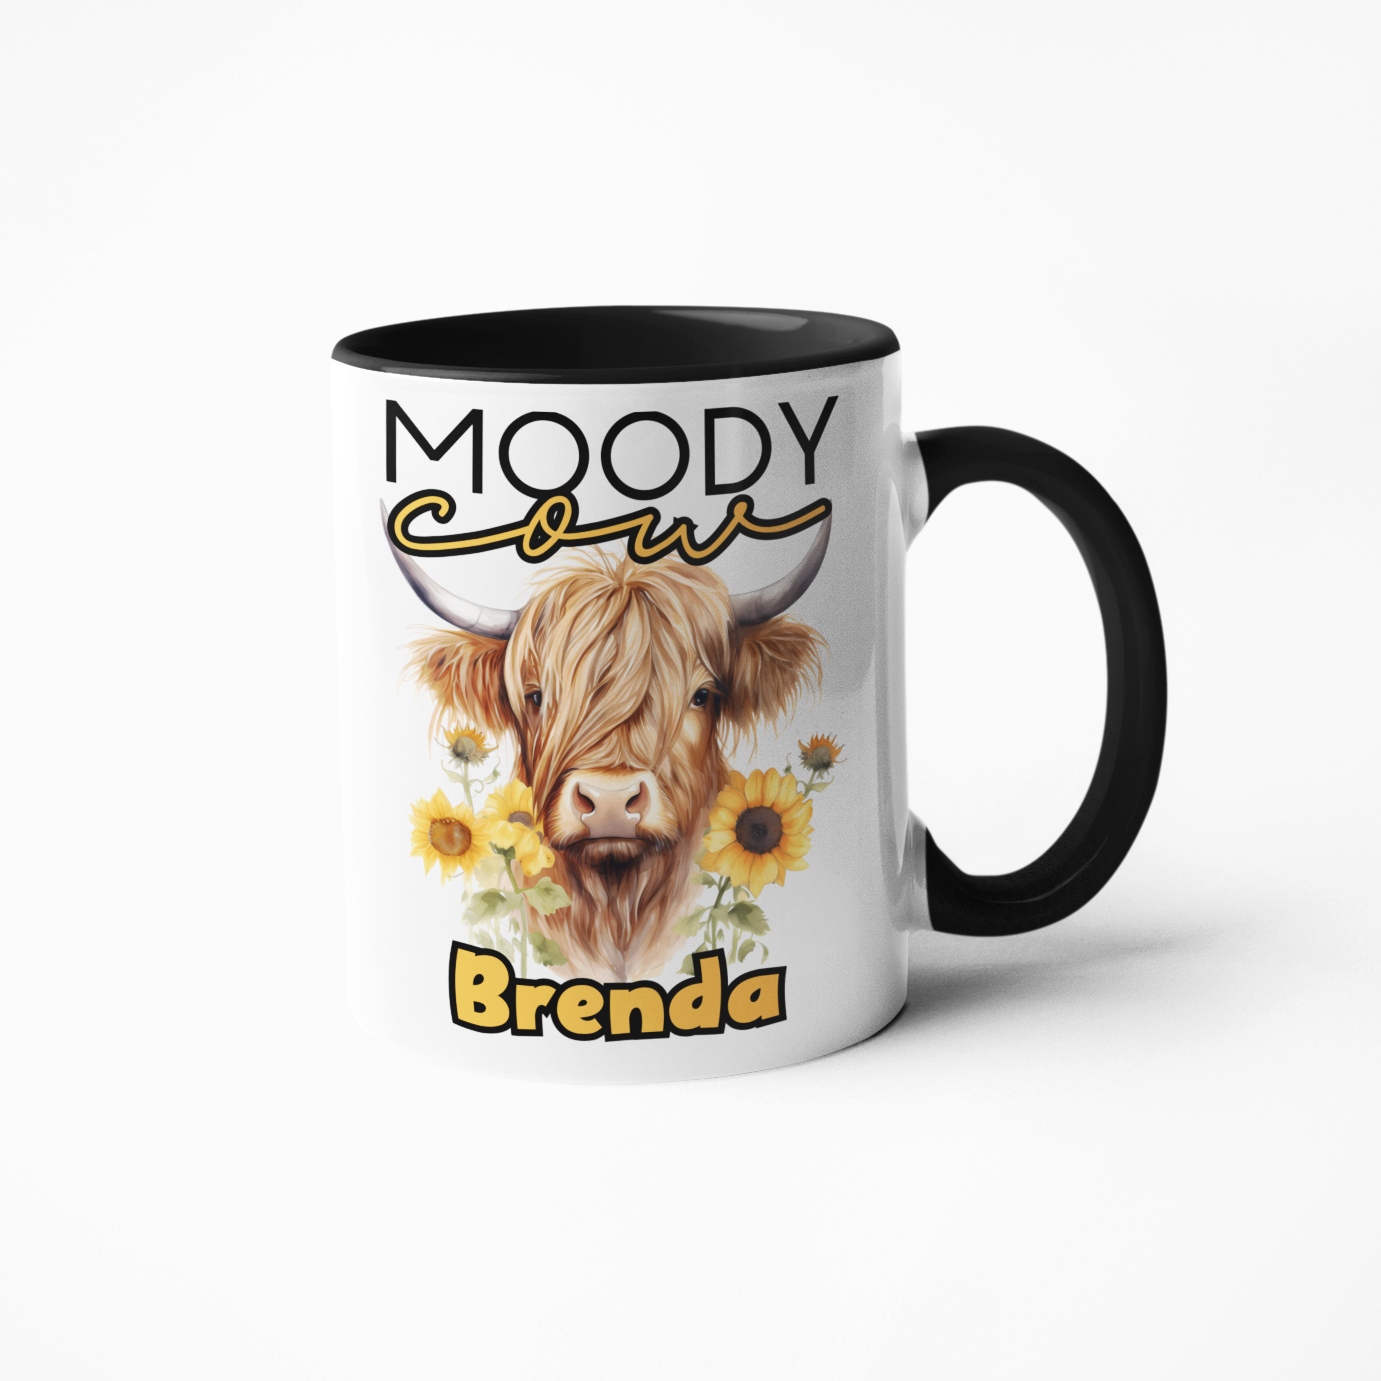 moody highland cow personalised mug with any name gift for birthday or Christmas